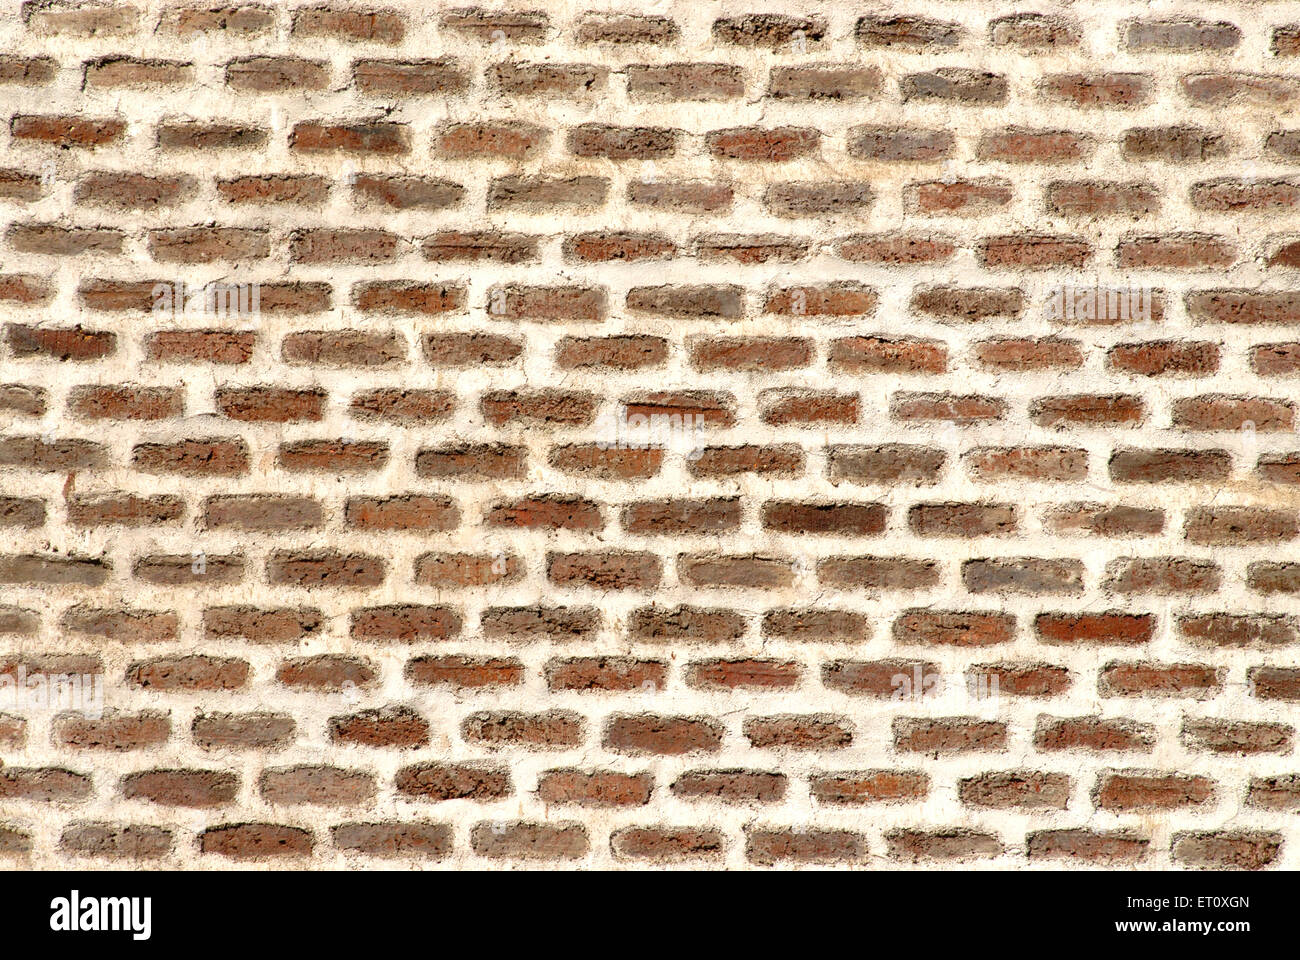 Mur de briques, Vishrambaug AMA, Palais Peshwa, Pune, Maharashtra, Inde Banque D'Images